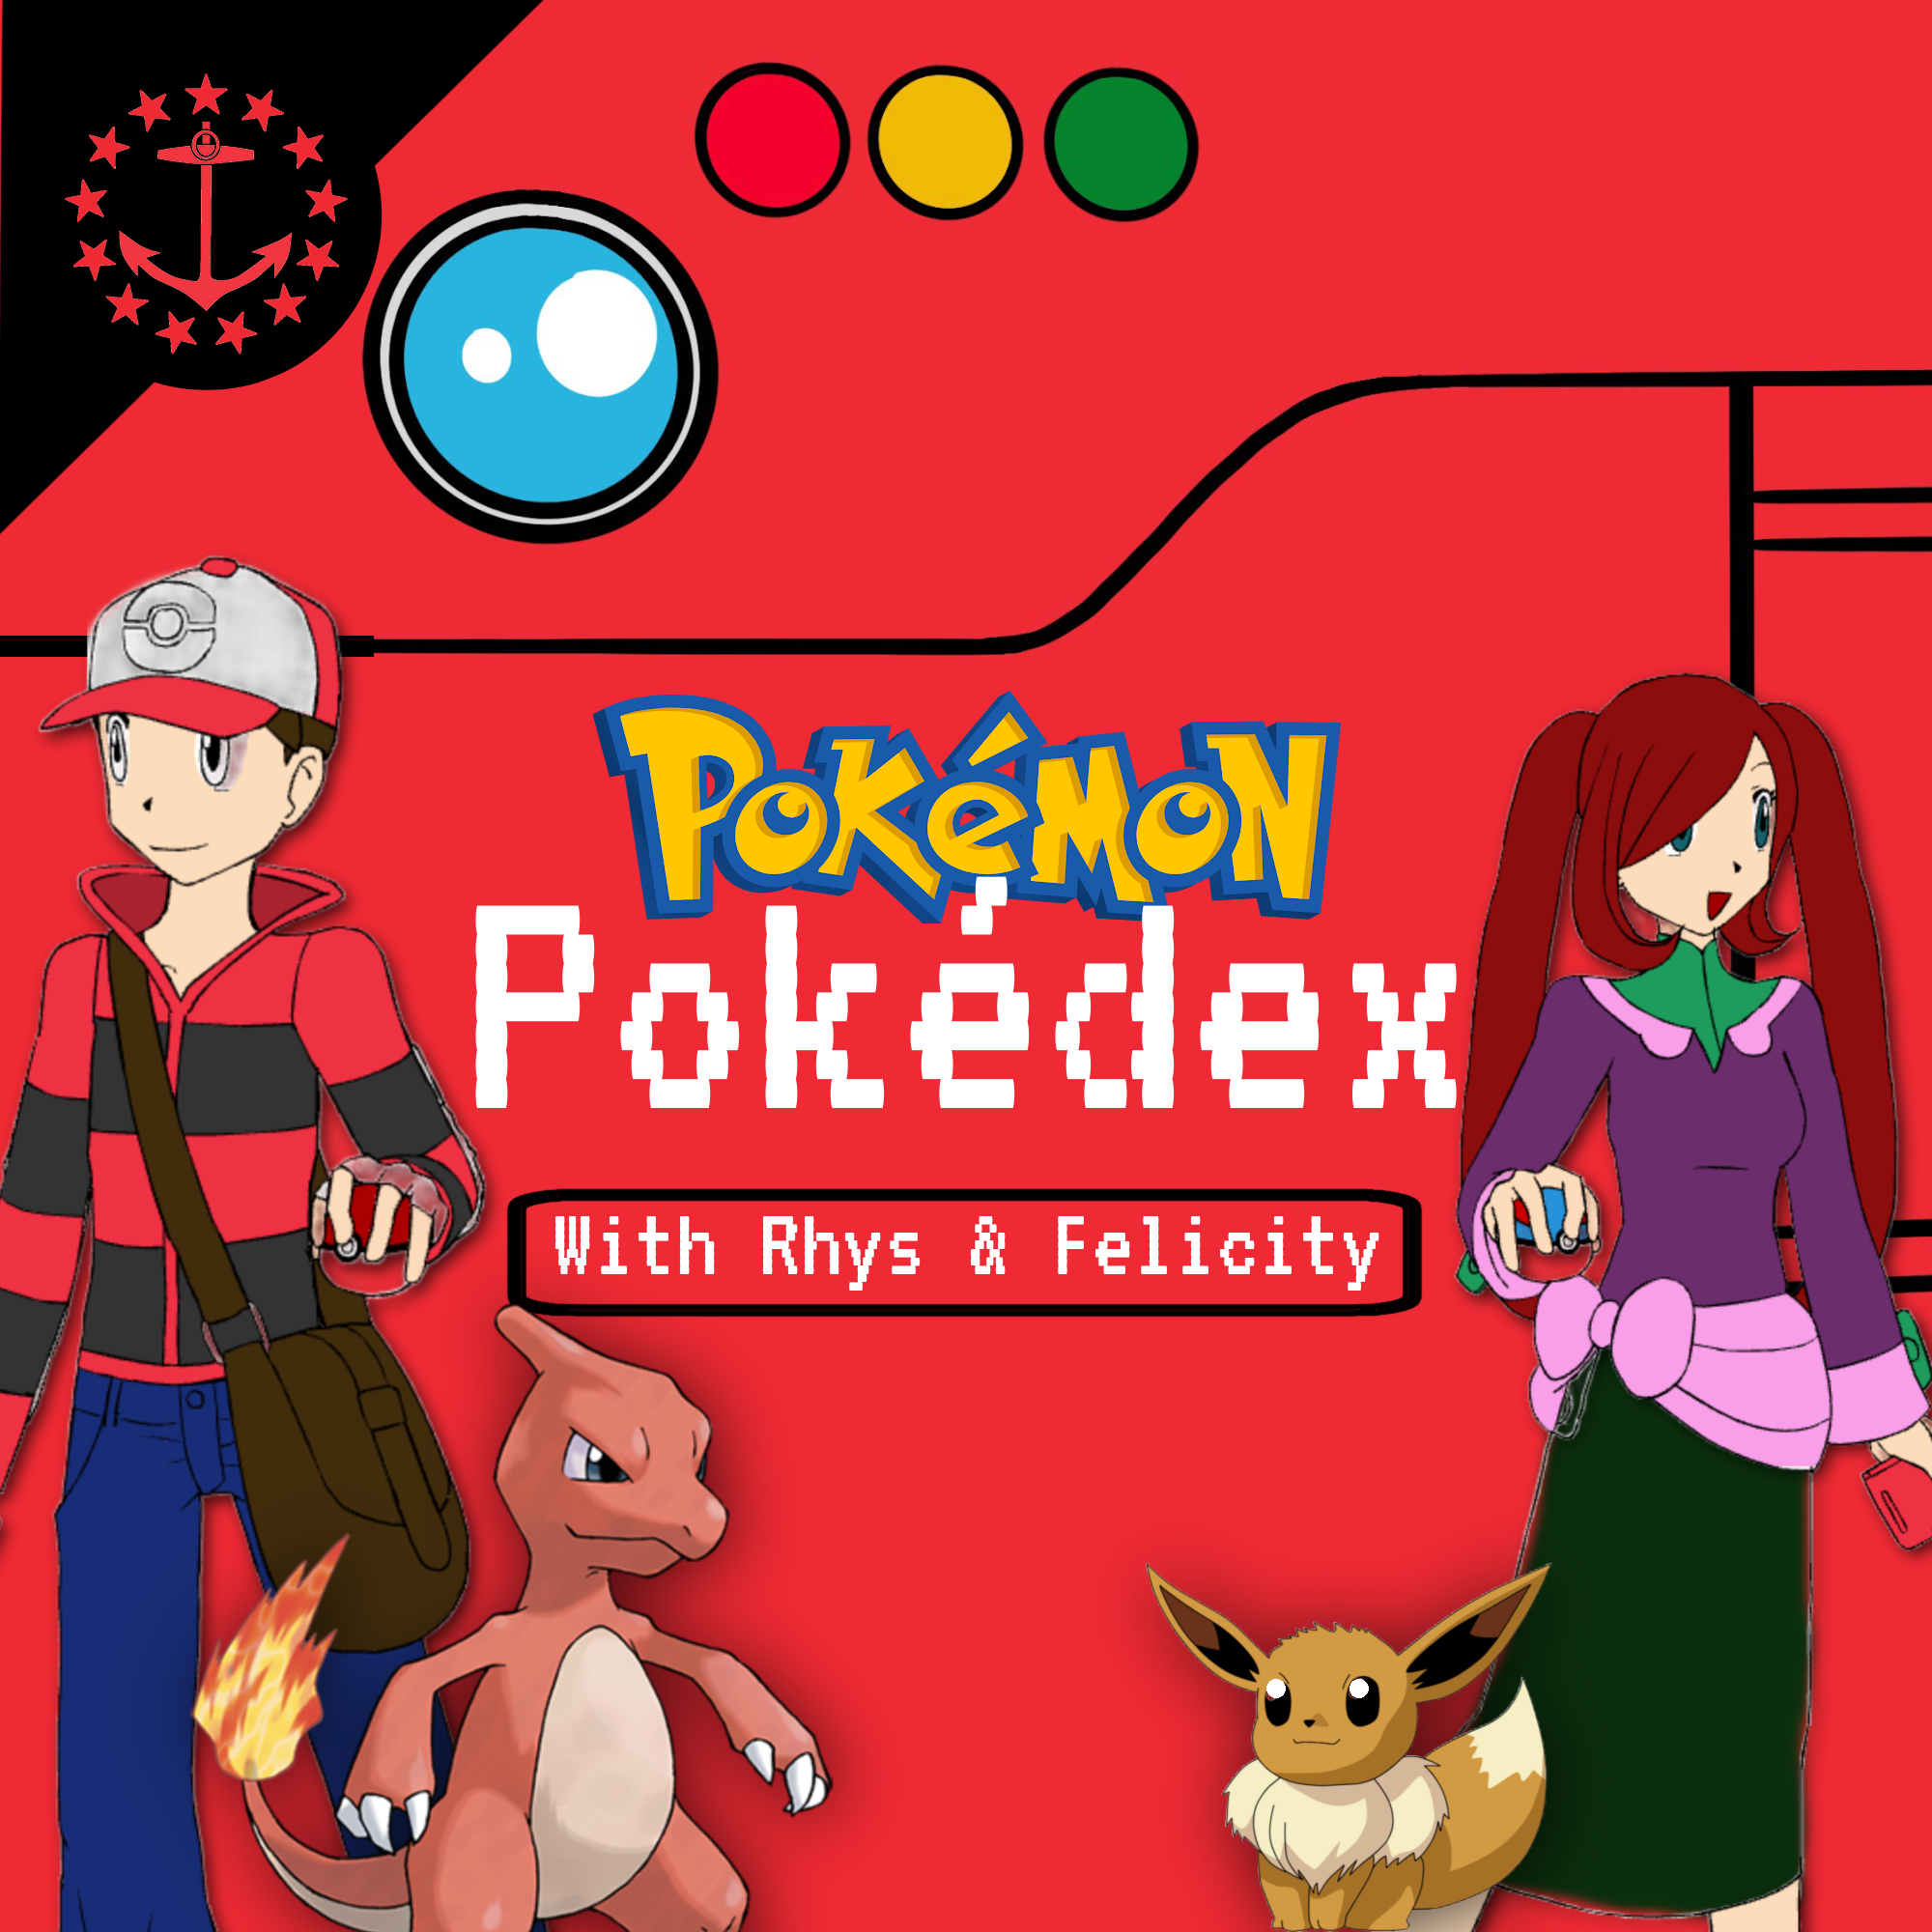 The Pokemon Pokedex Podcast With Rhys & Felicity